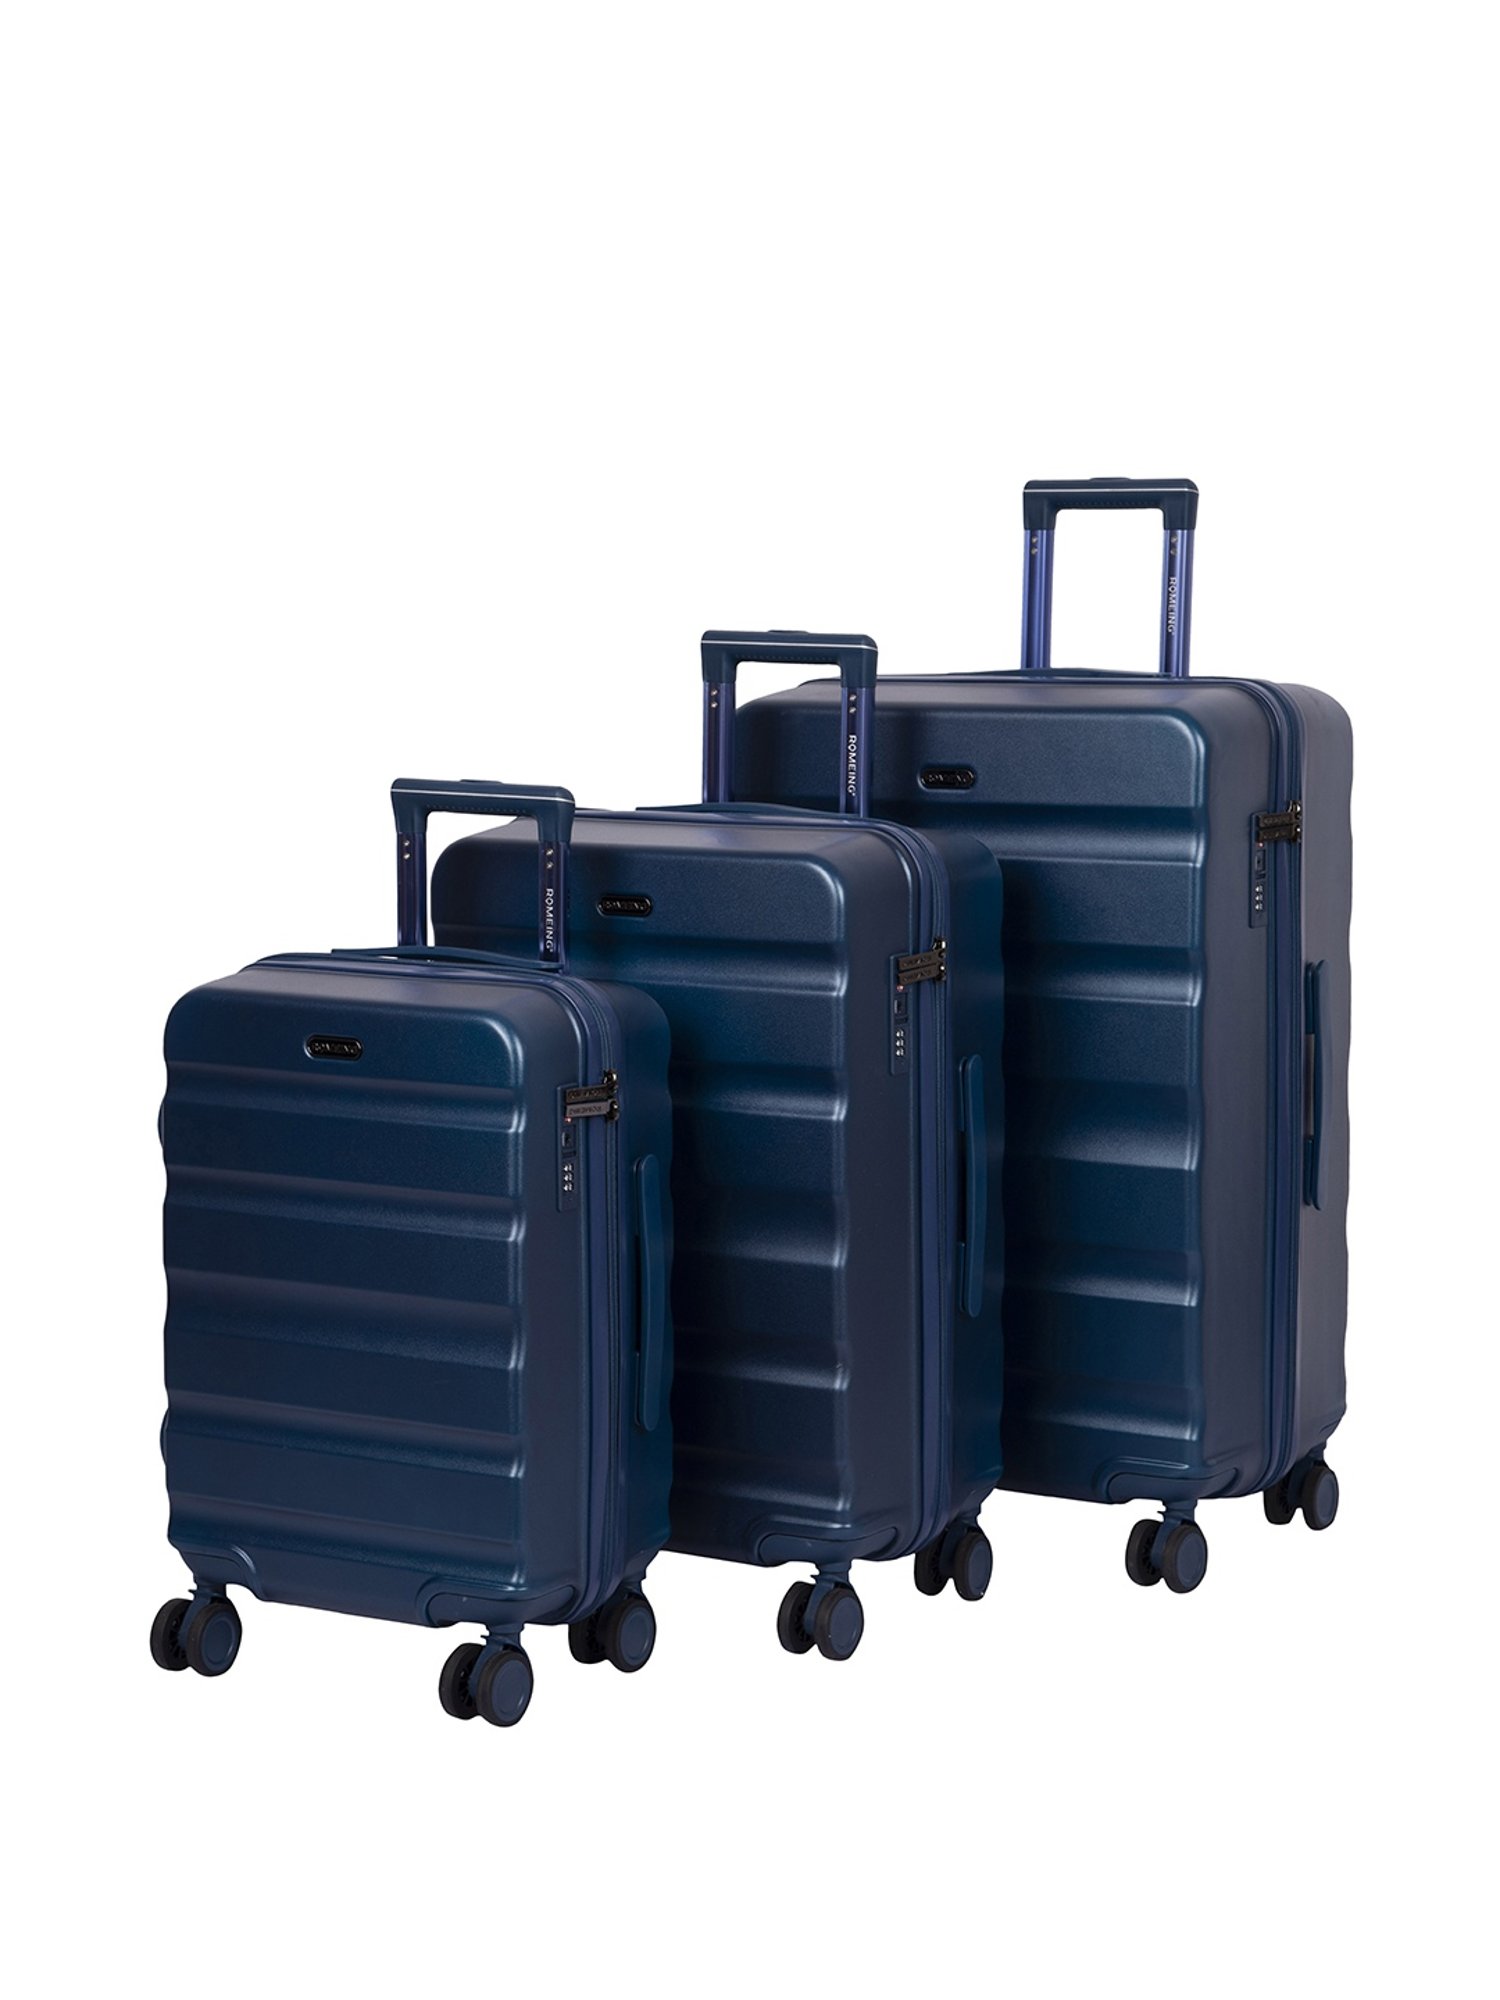 ROMEING Capri Polycarbonate Hardside (20 inch|55 cm) (Rosegold) Luggage  Cabin Trolley Bag | Trolley bags, Premium luggage, Luggage